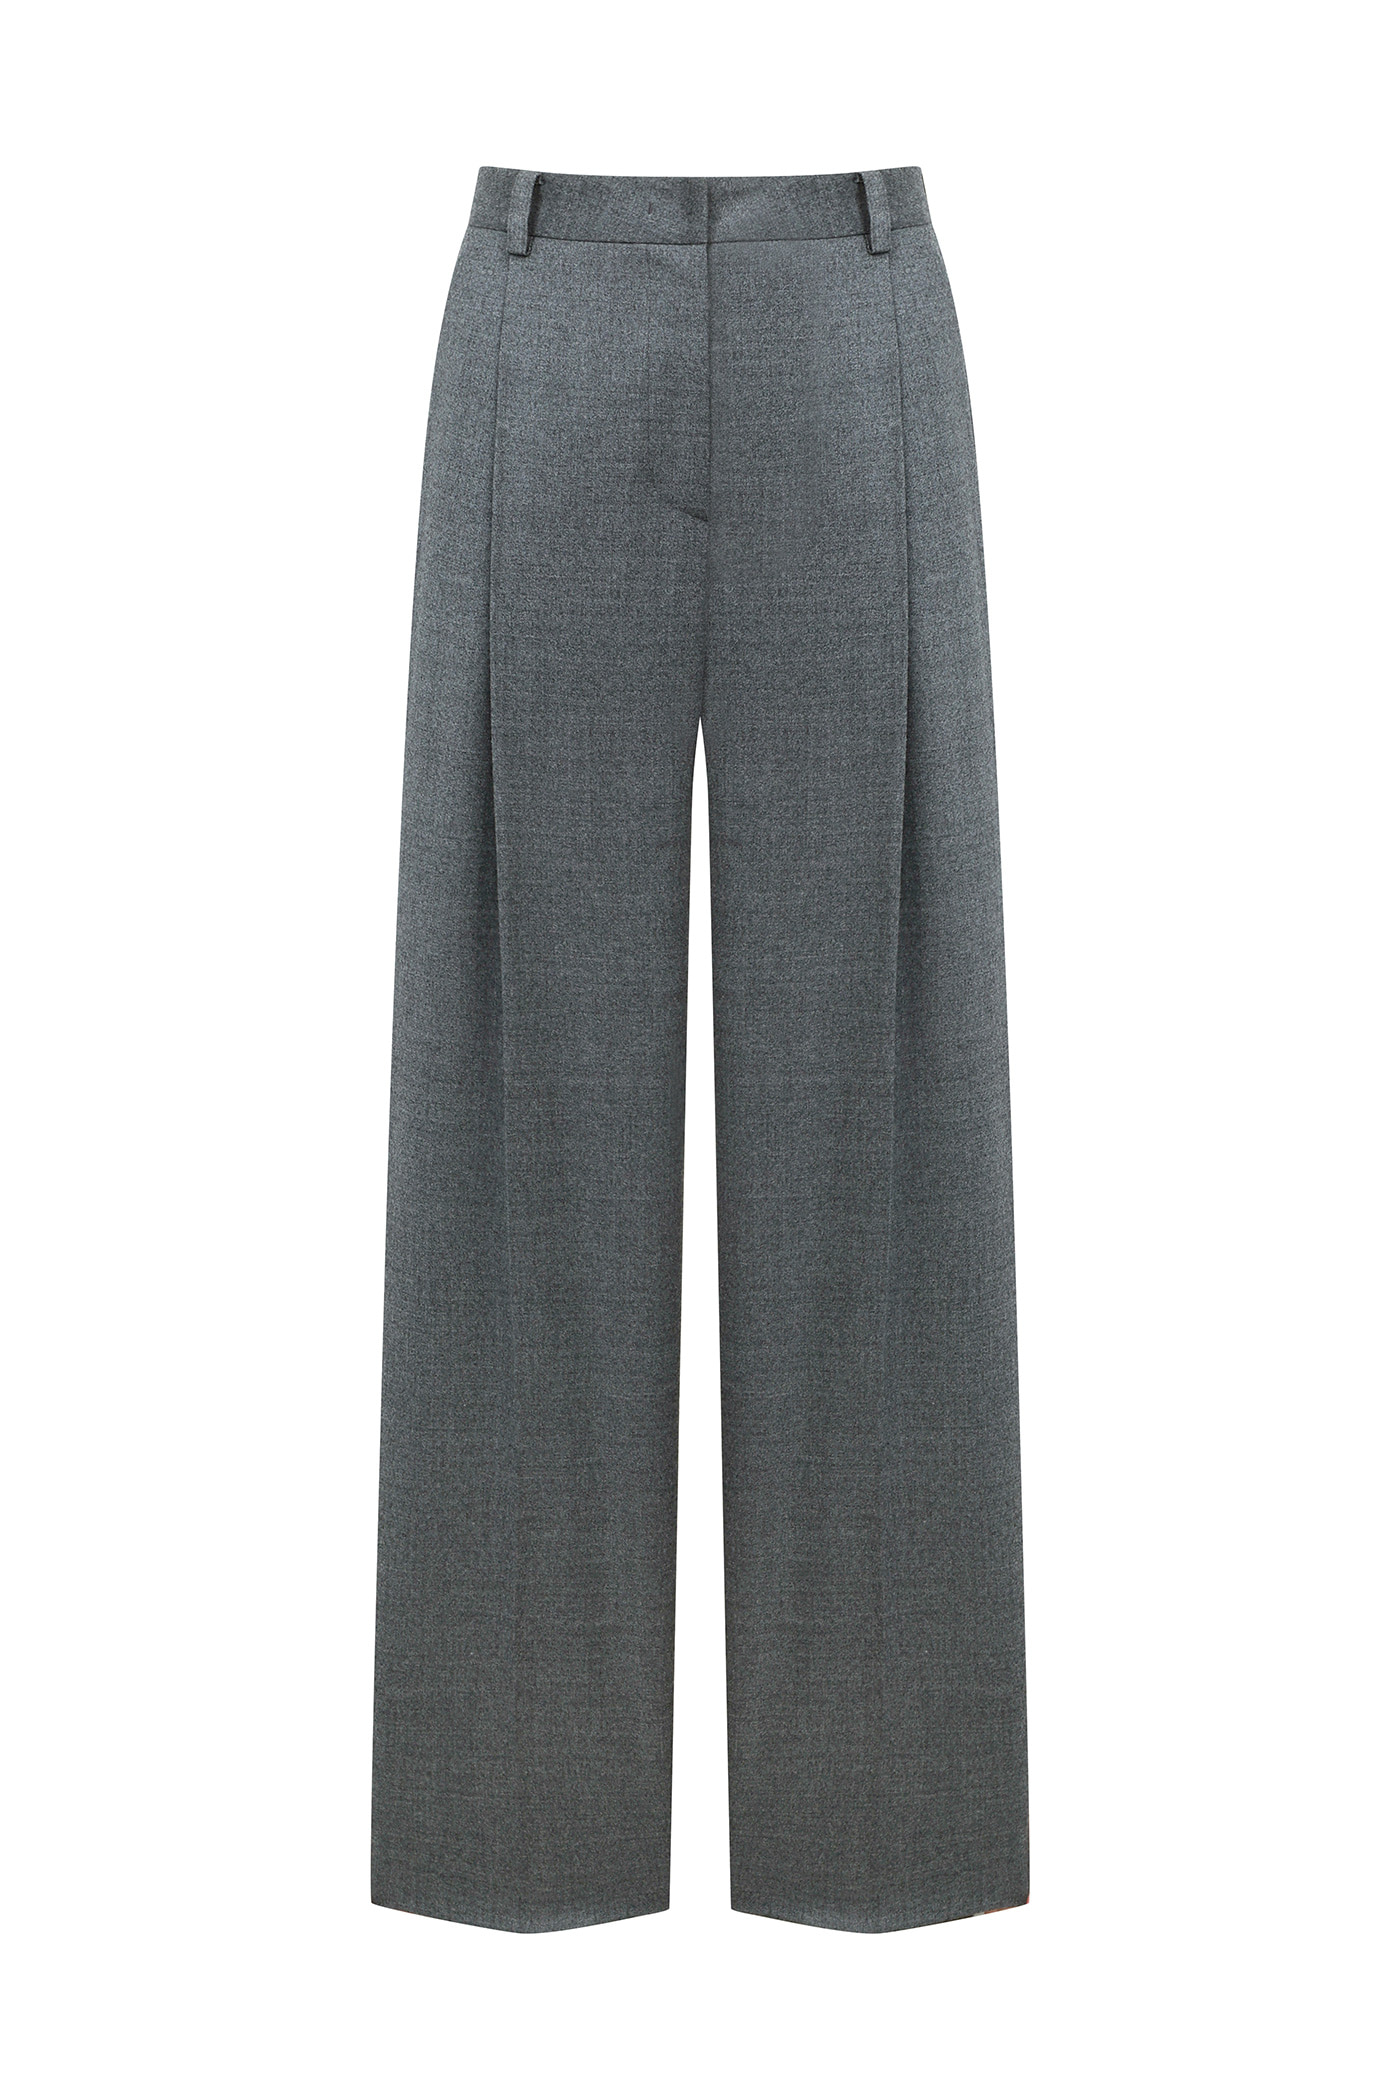 Wool One Tuck Pants[LMBBWIPT203]-Charcoal